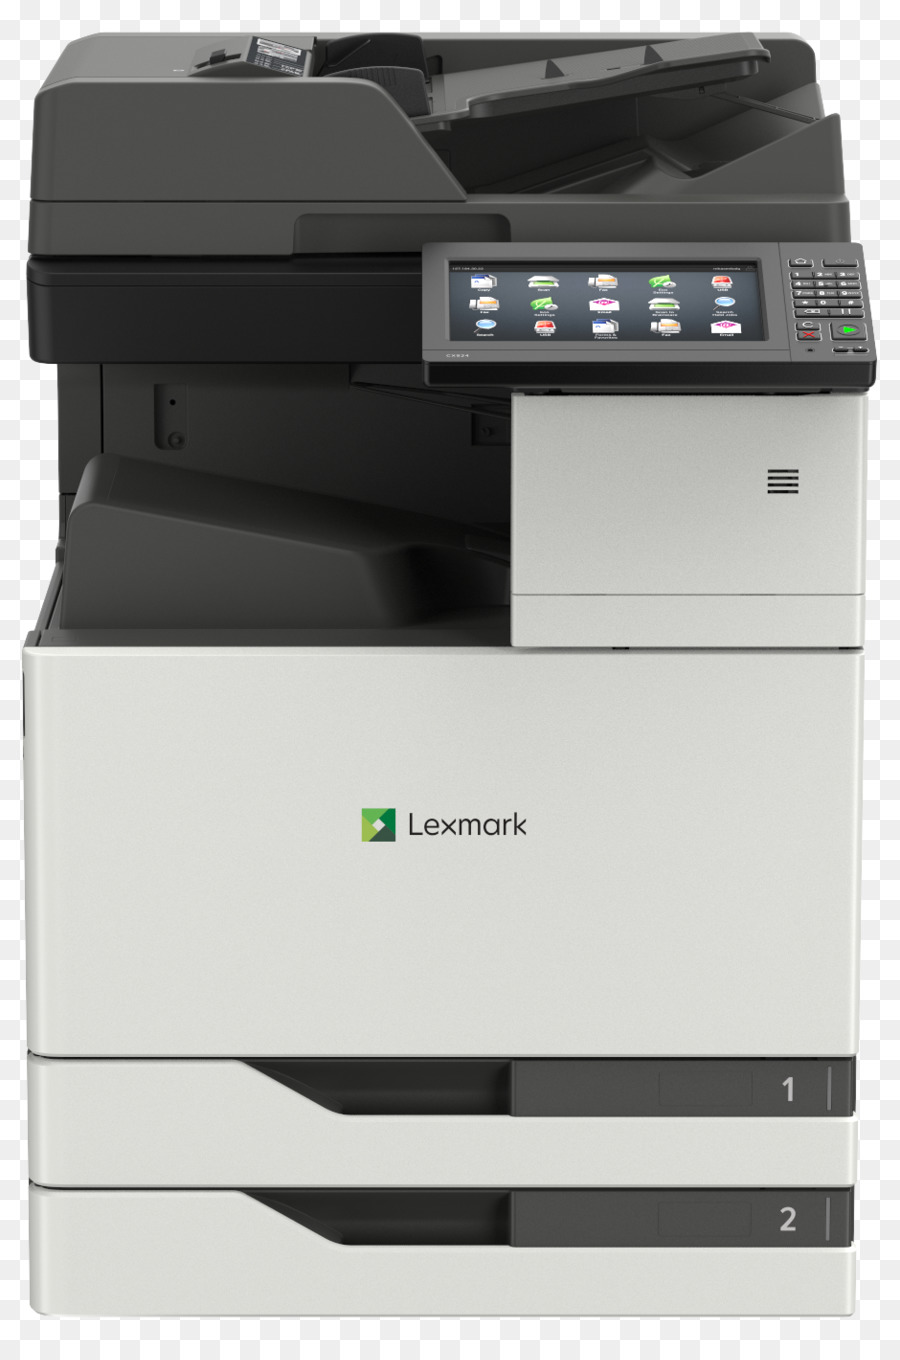 Lexmark Printer